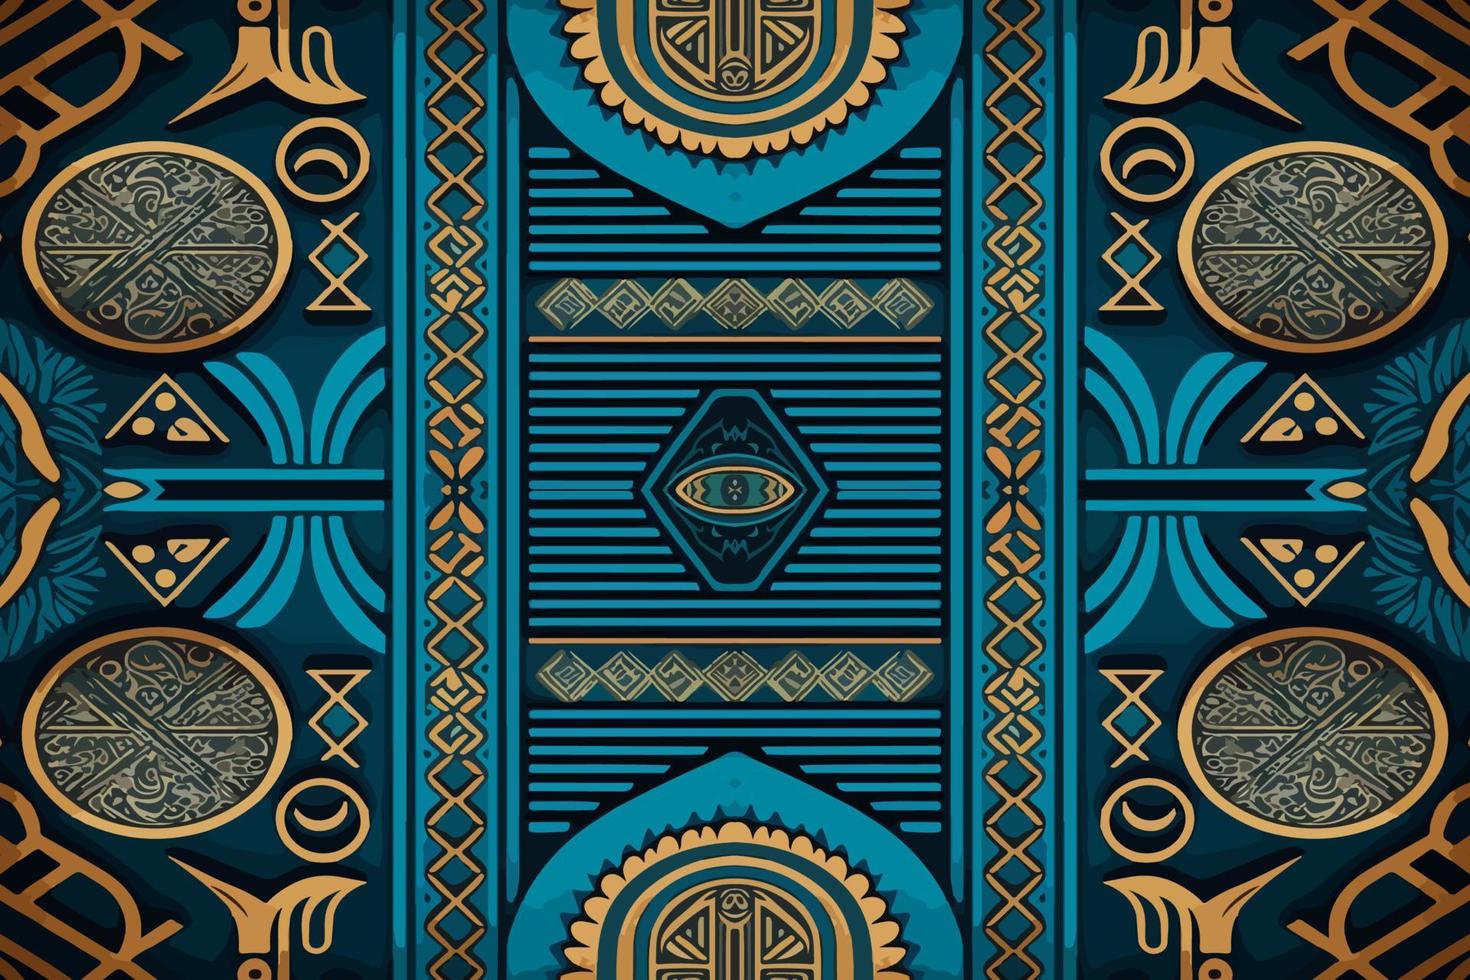 egyptisk geometri mönster gammal gammal bakgrund. abstrakt traditionell folk antik stam- etnisk grafisk linje. utsmyckad elegant lyx årgång retro stil. textur textil- tyg etnisk egypten mönster vektor